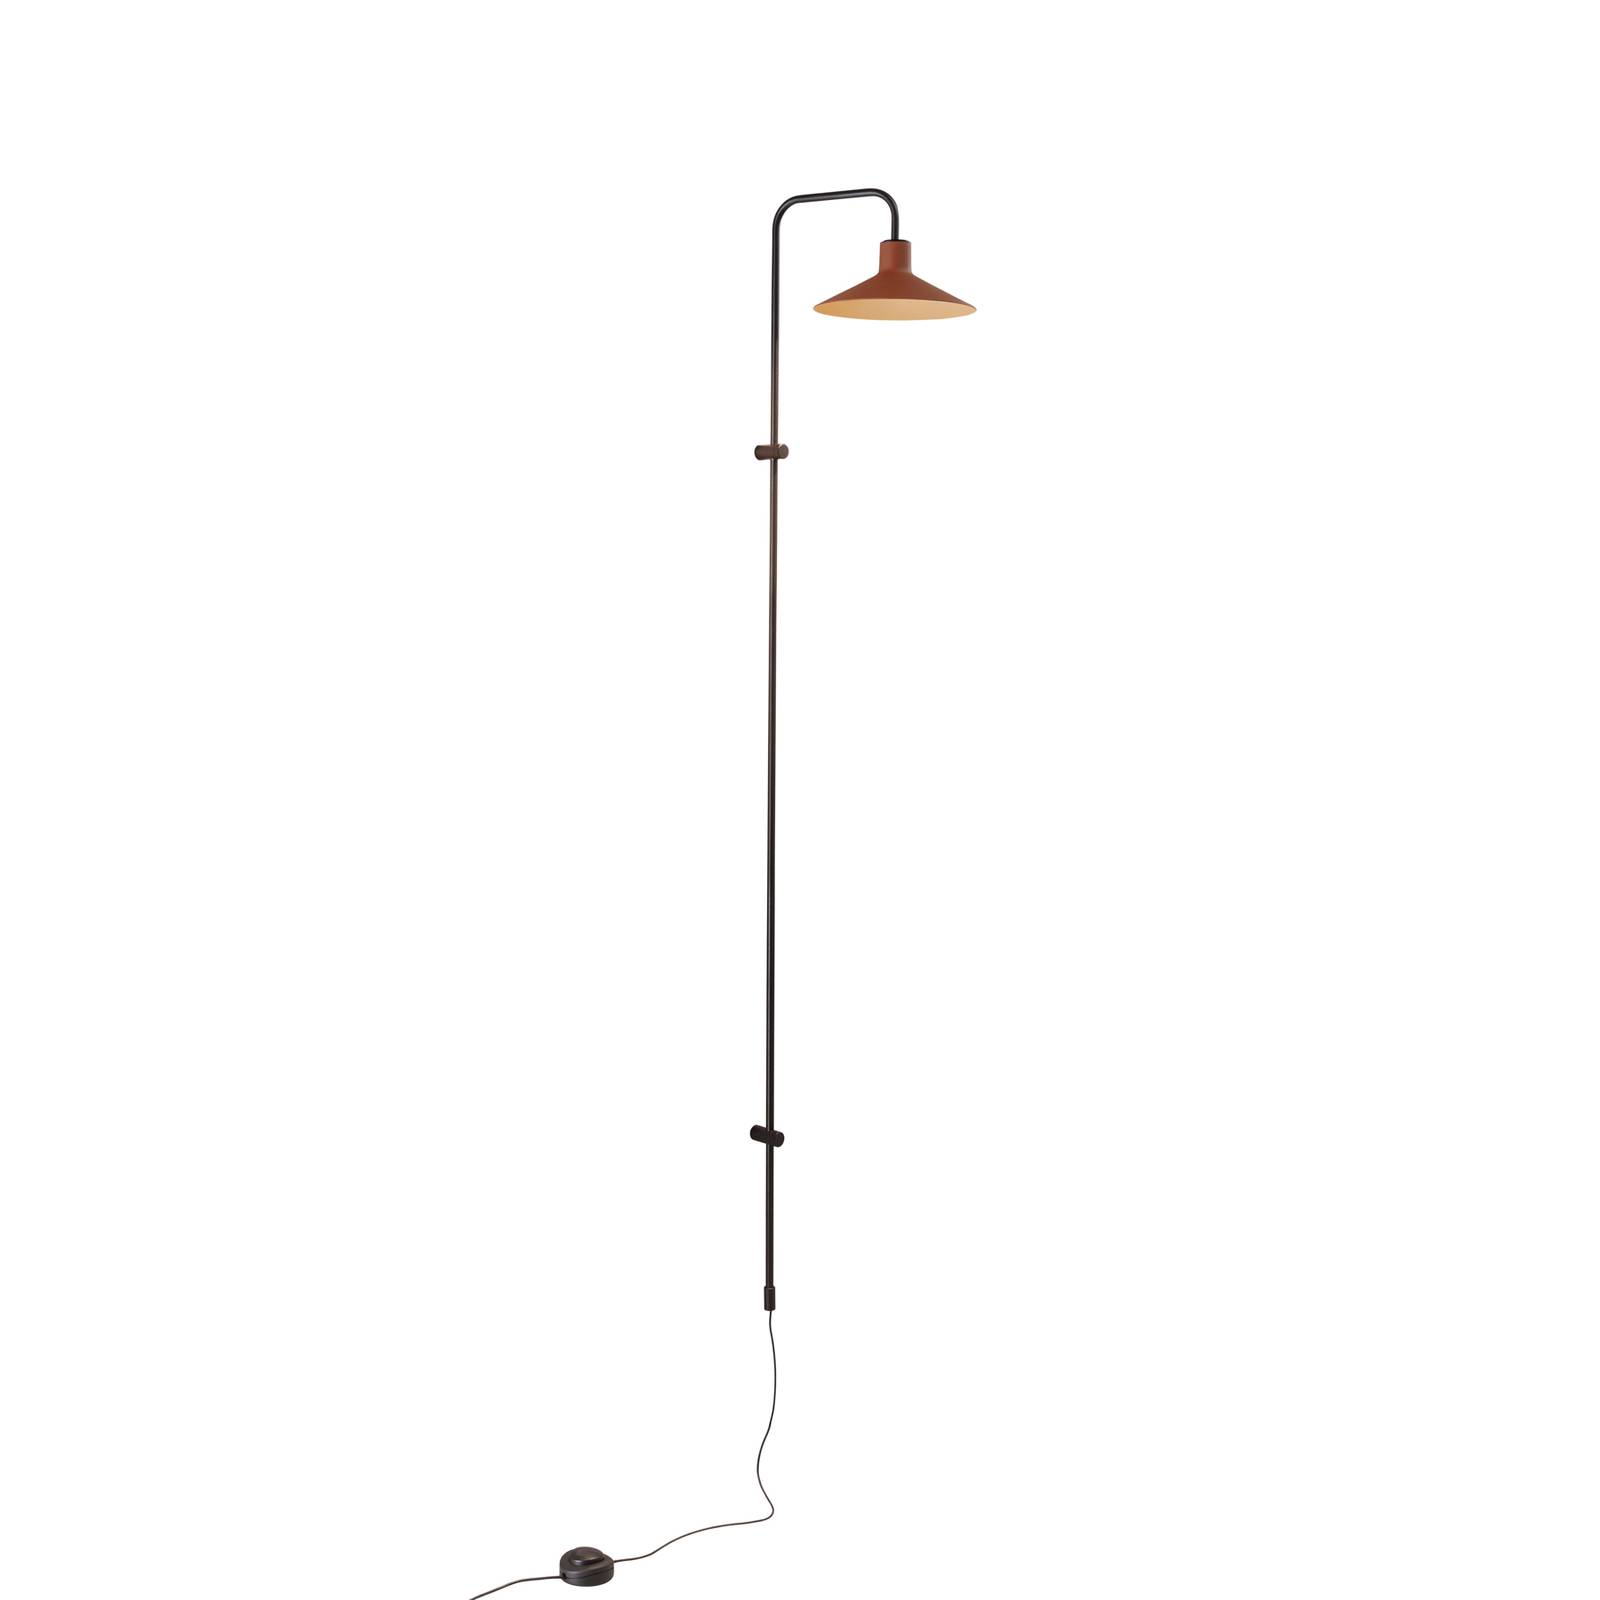 Bover Platet A05 LED-Wandlampe Dimmer, terracotta günstig online kaufen